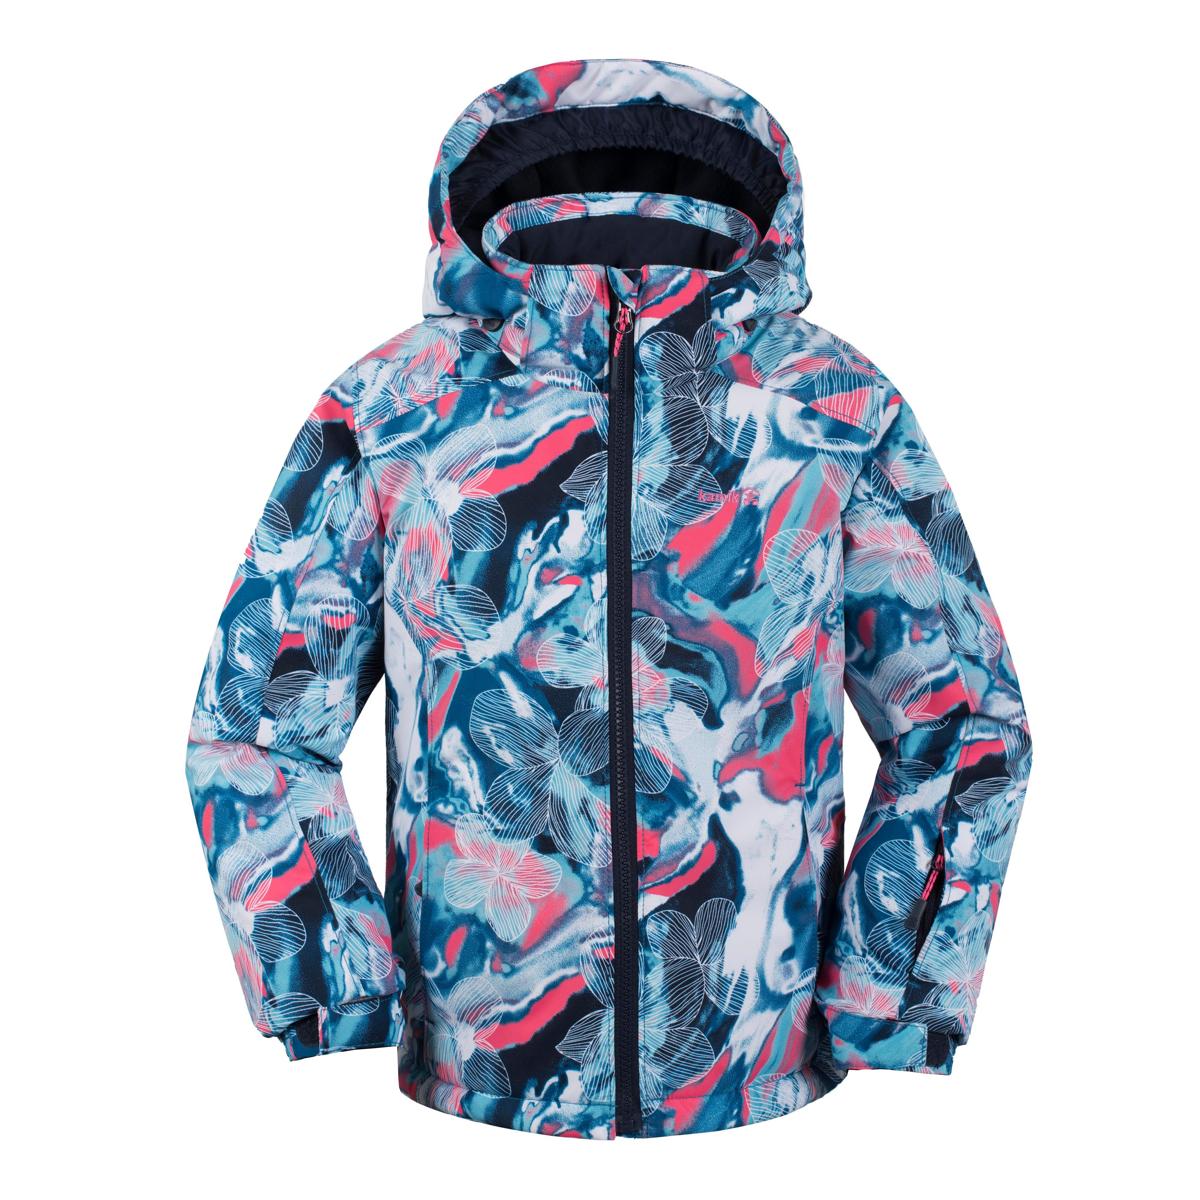 Roxy Girls' American Pie Winter Jacket, Kids', Ski, Insulated, Waterproof,  Hooded